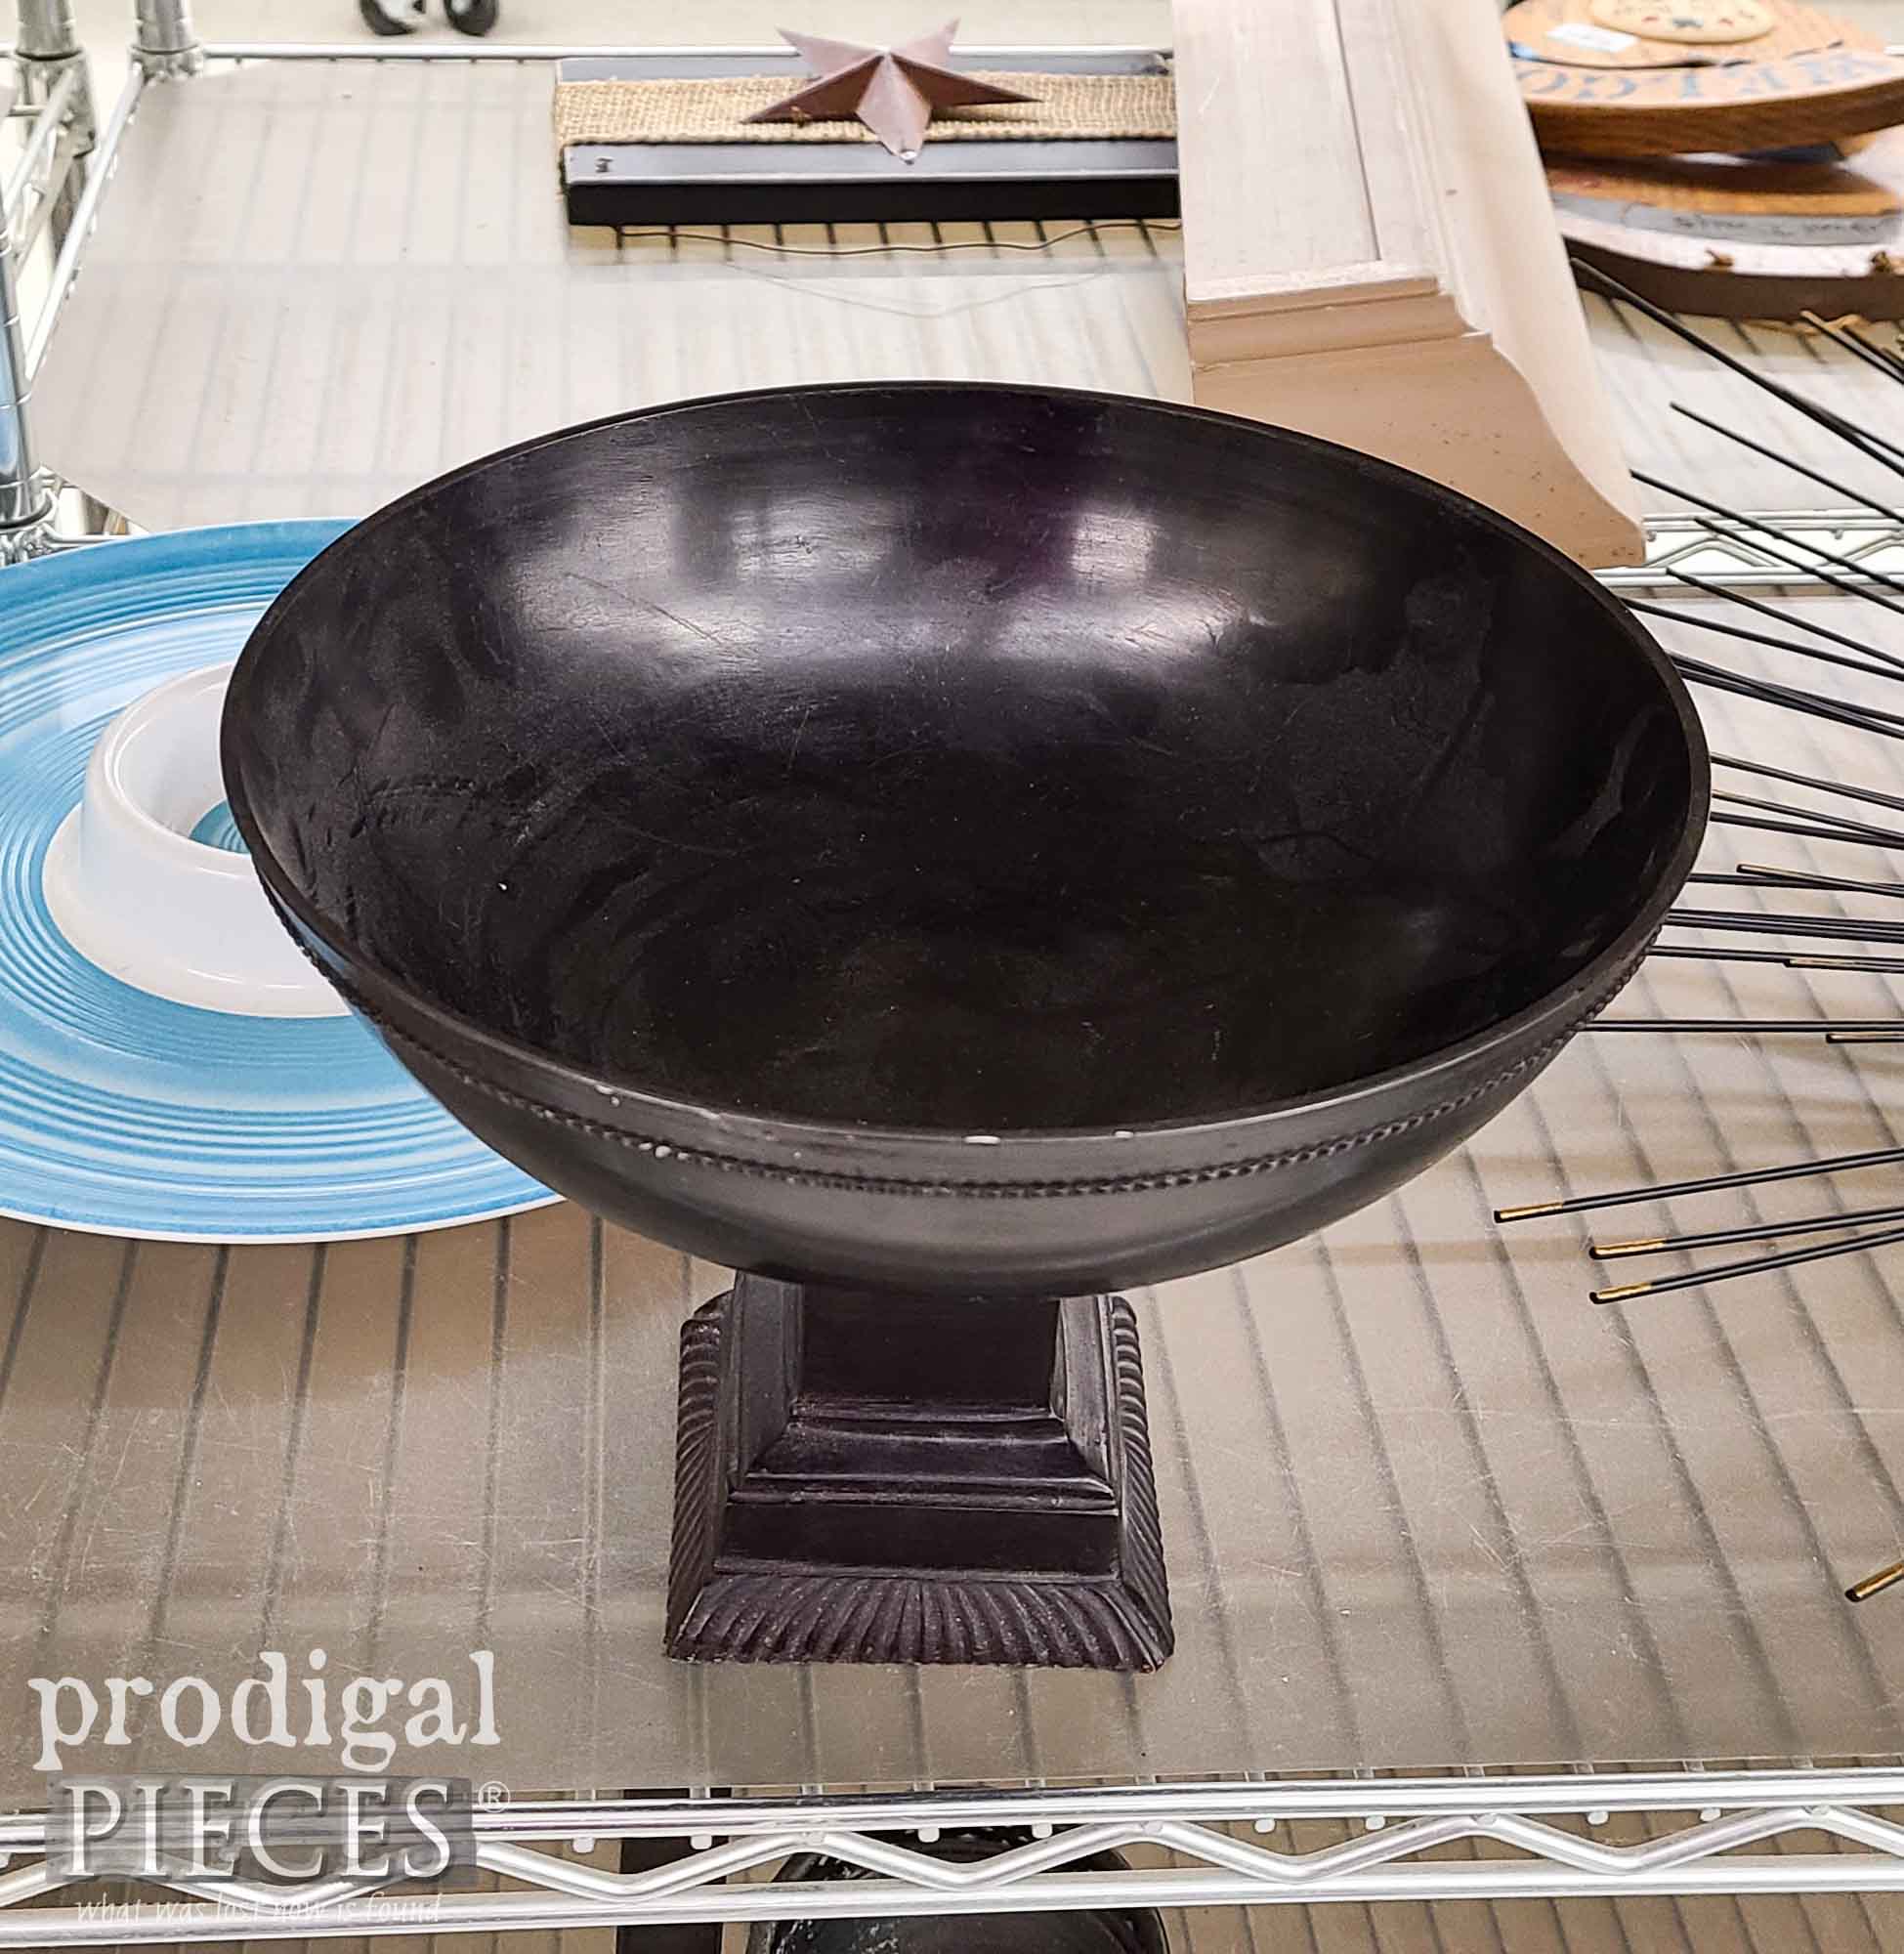 Thrifted Compote Bowl Before | prodigalpieces.com #prodigalpieces